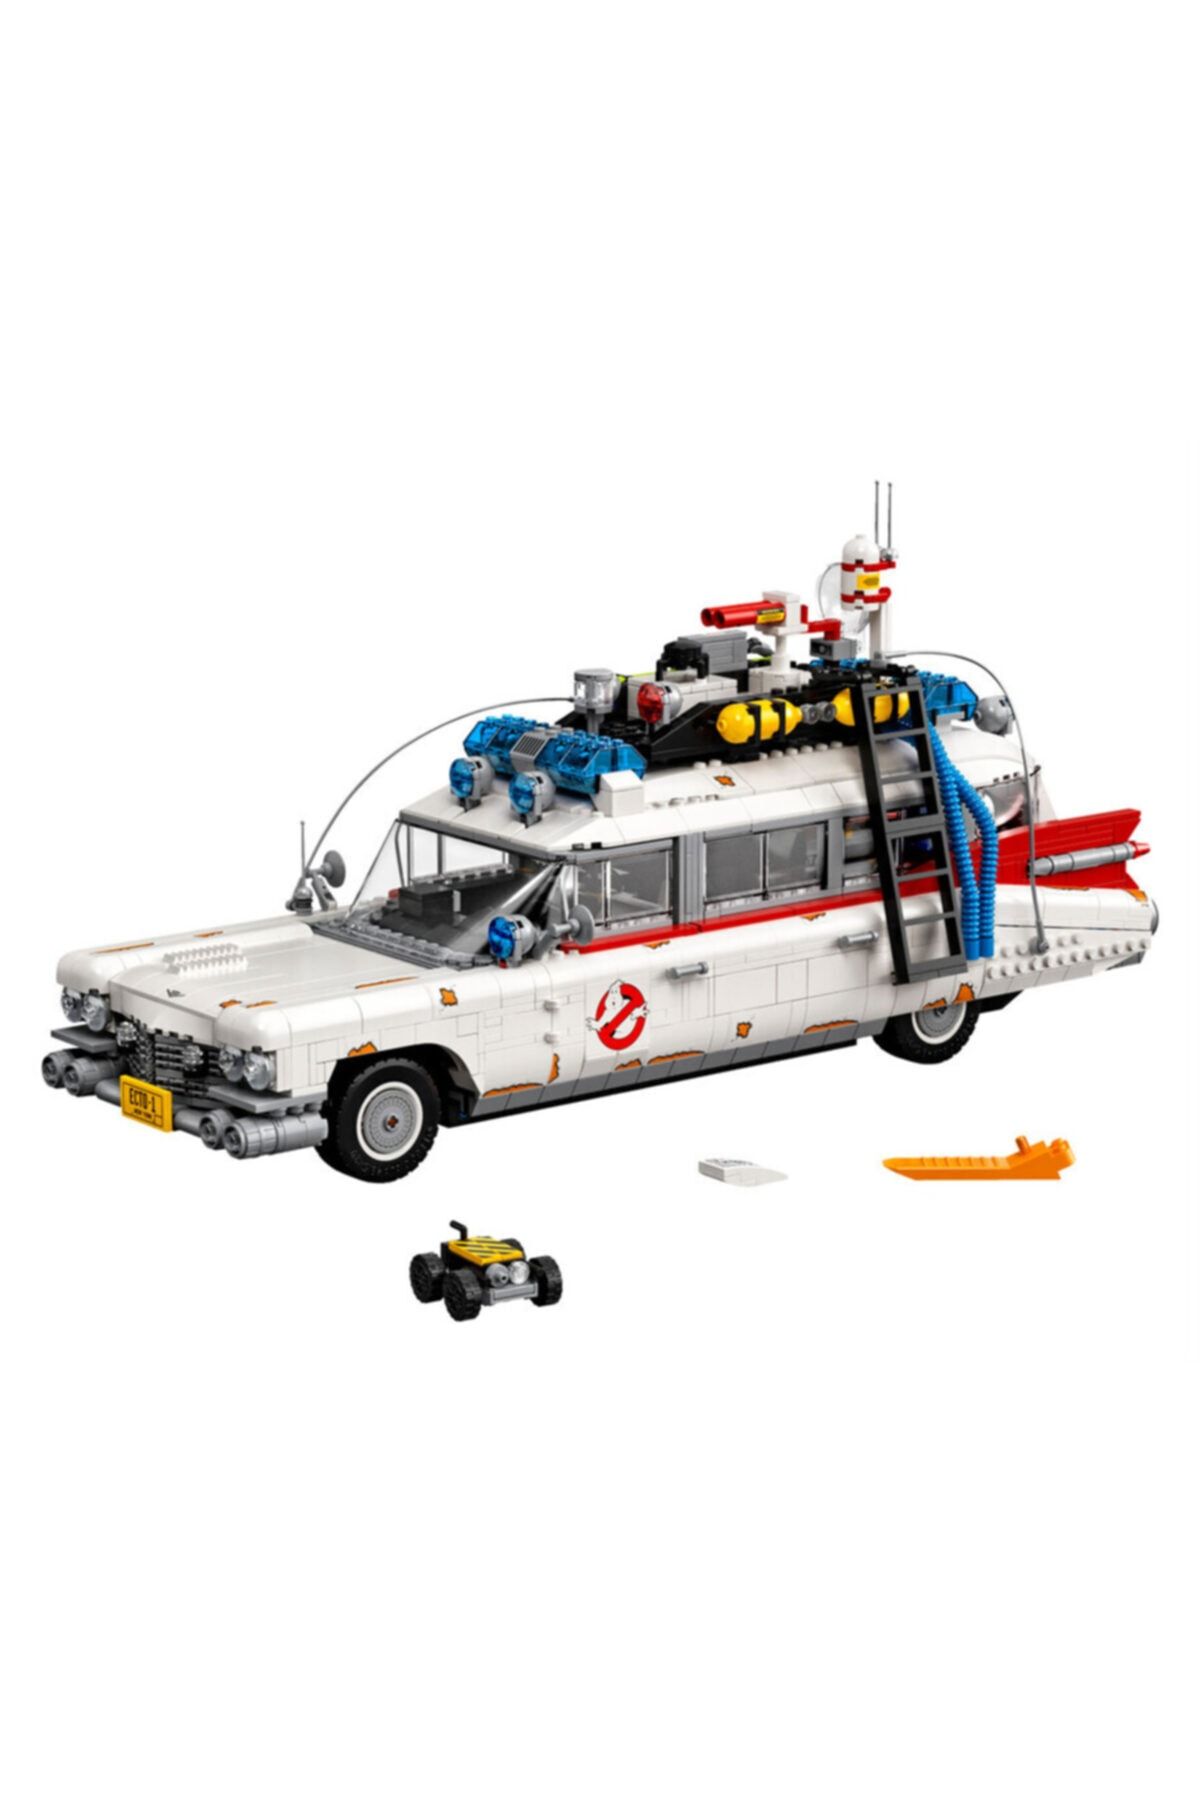 LEGO Creator Expert 10274 Ghostbusters™ Ecto-1